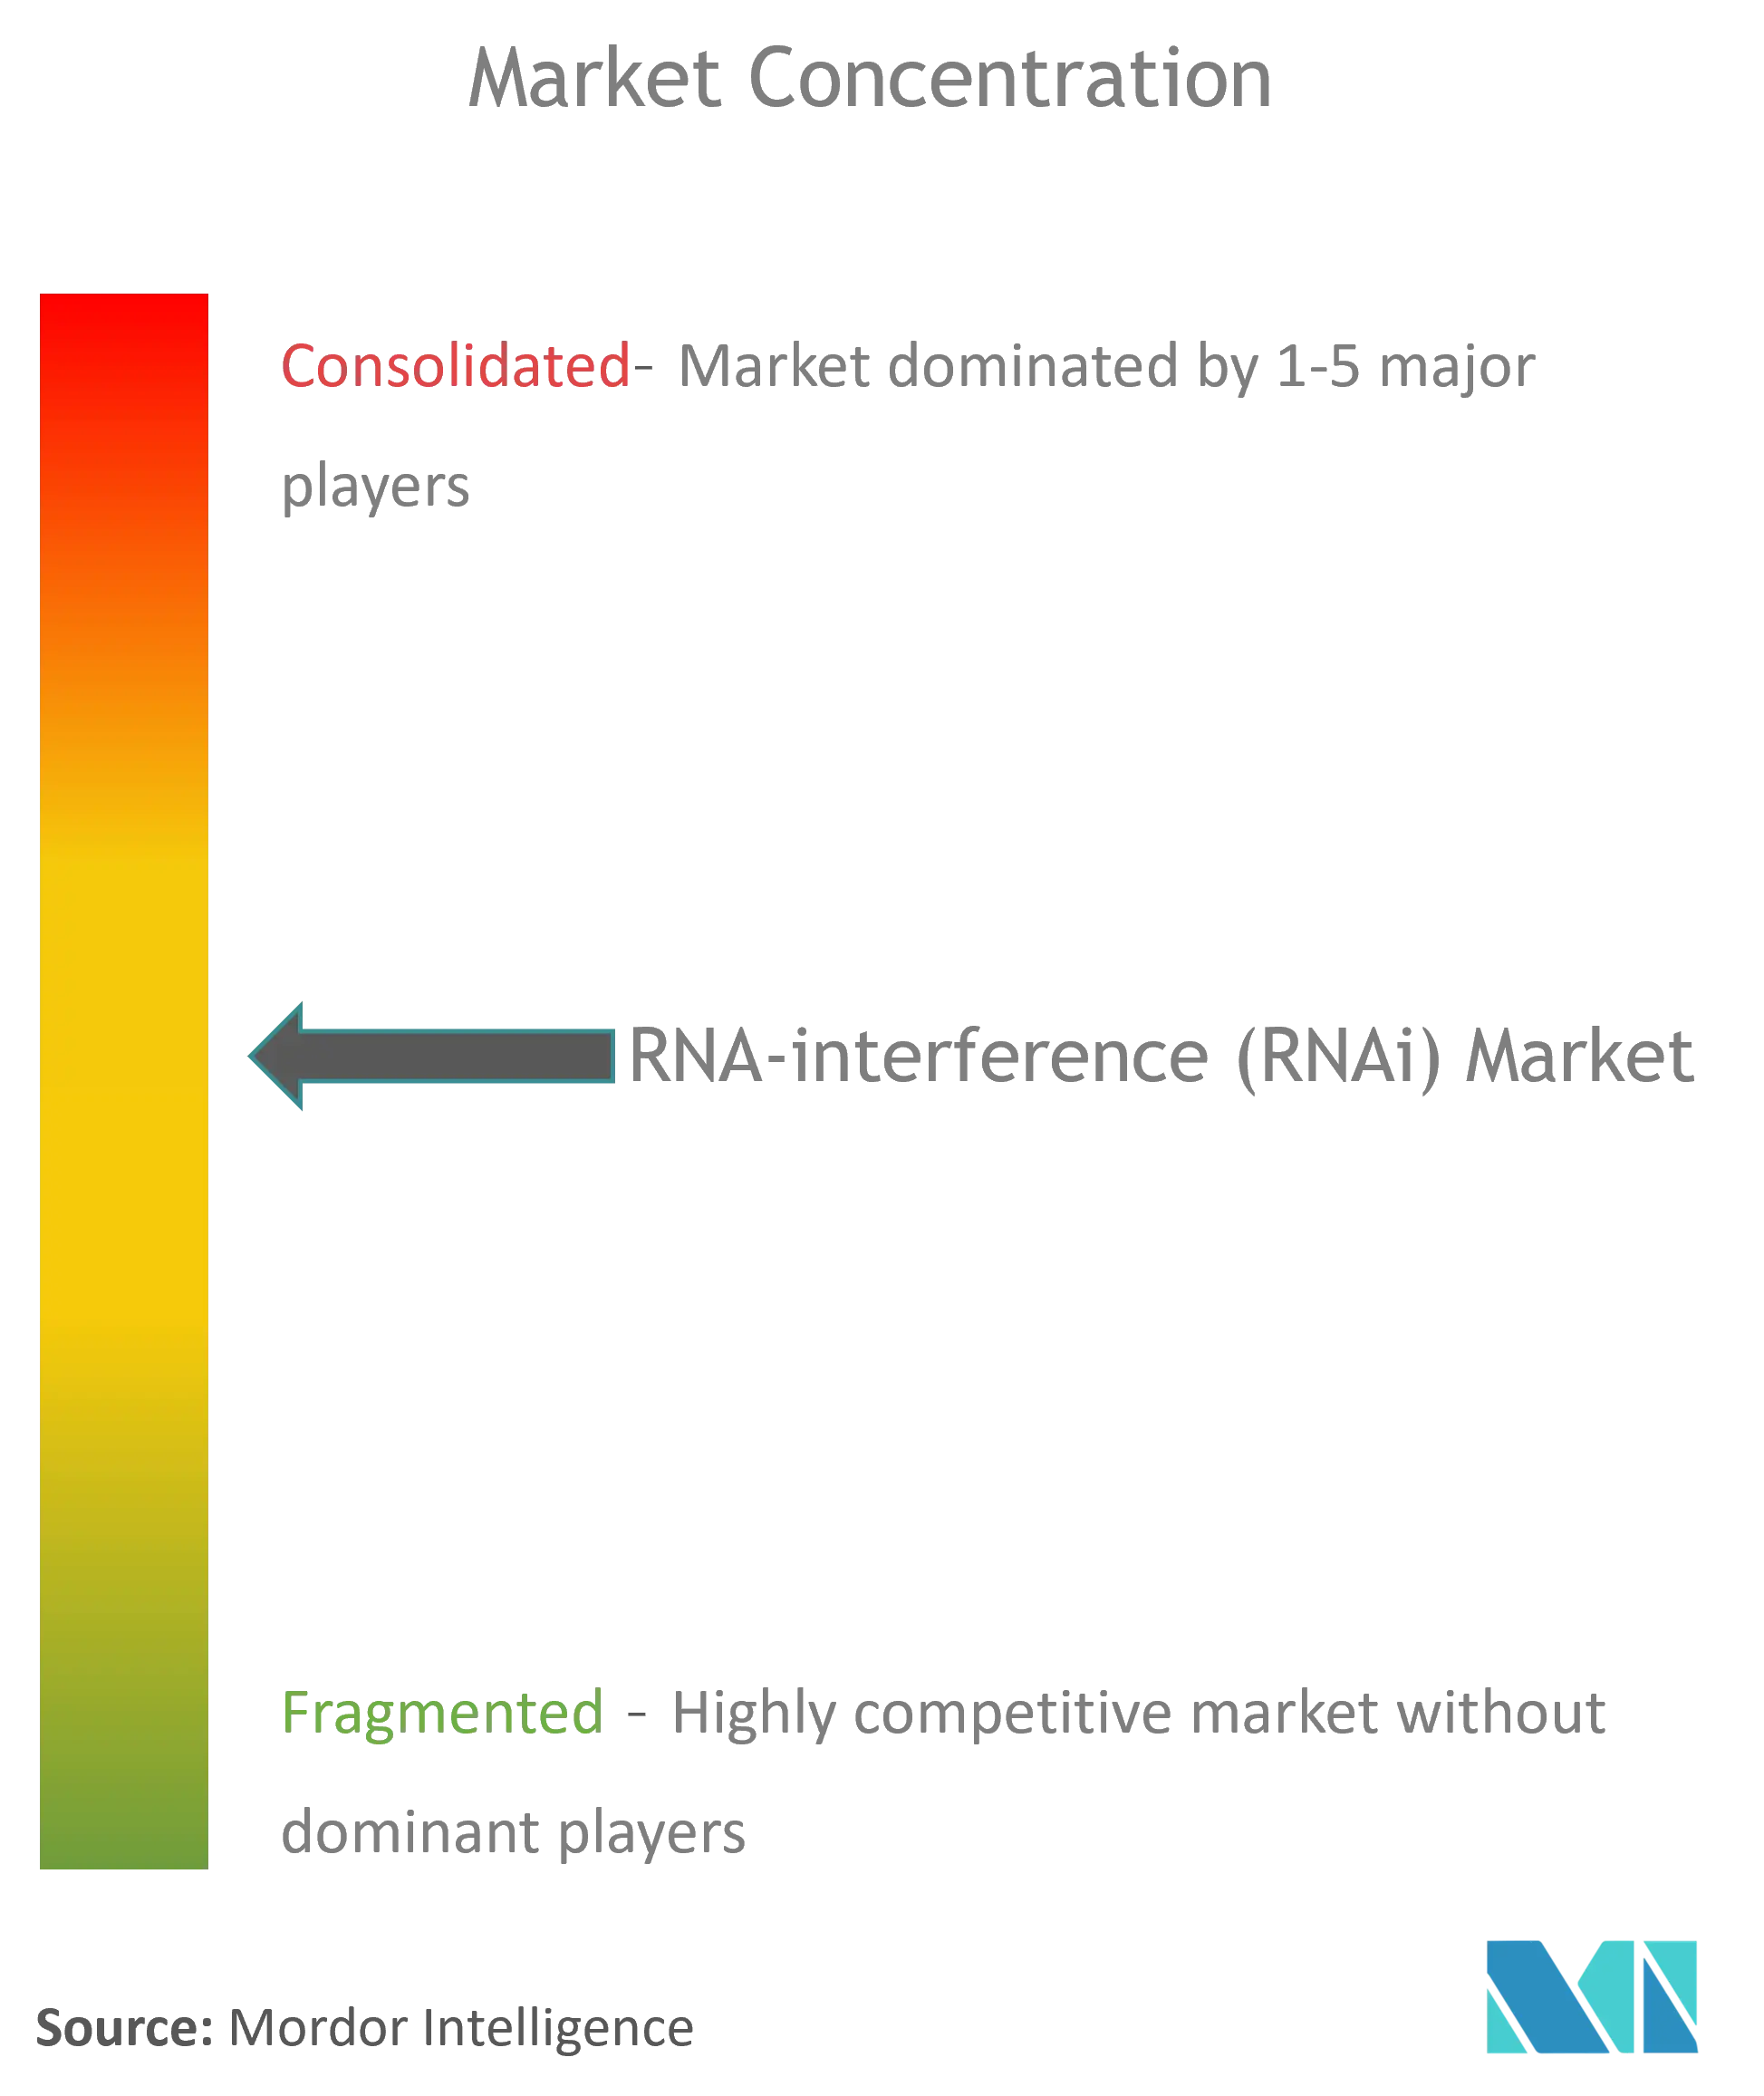 Global RNA-interference (RNAi) Market Concentration